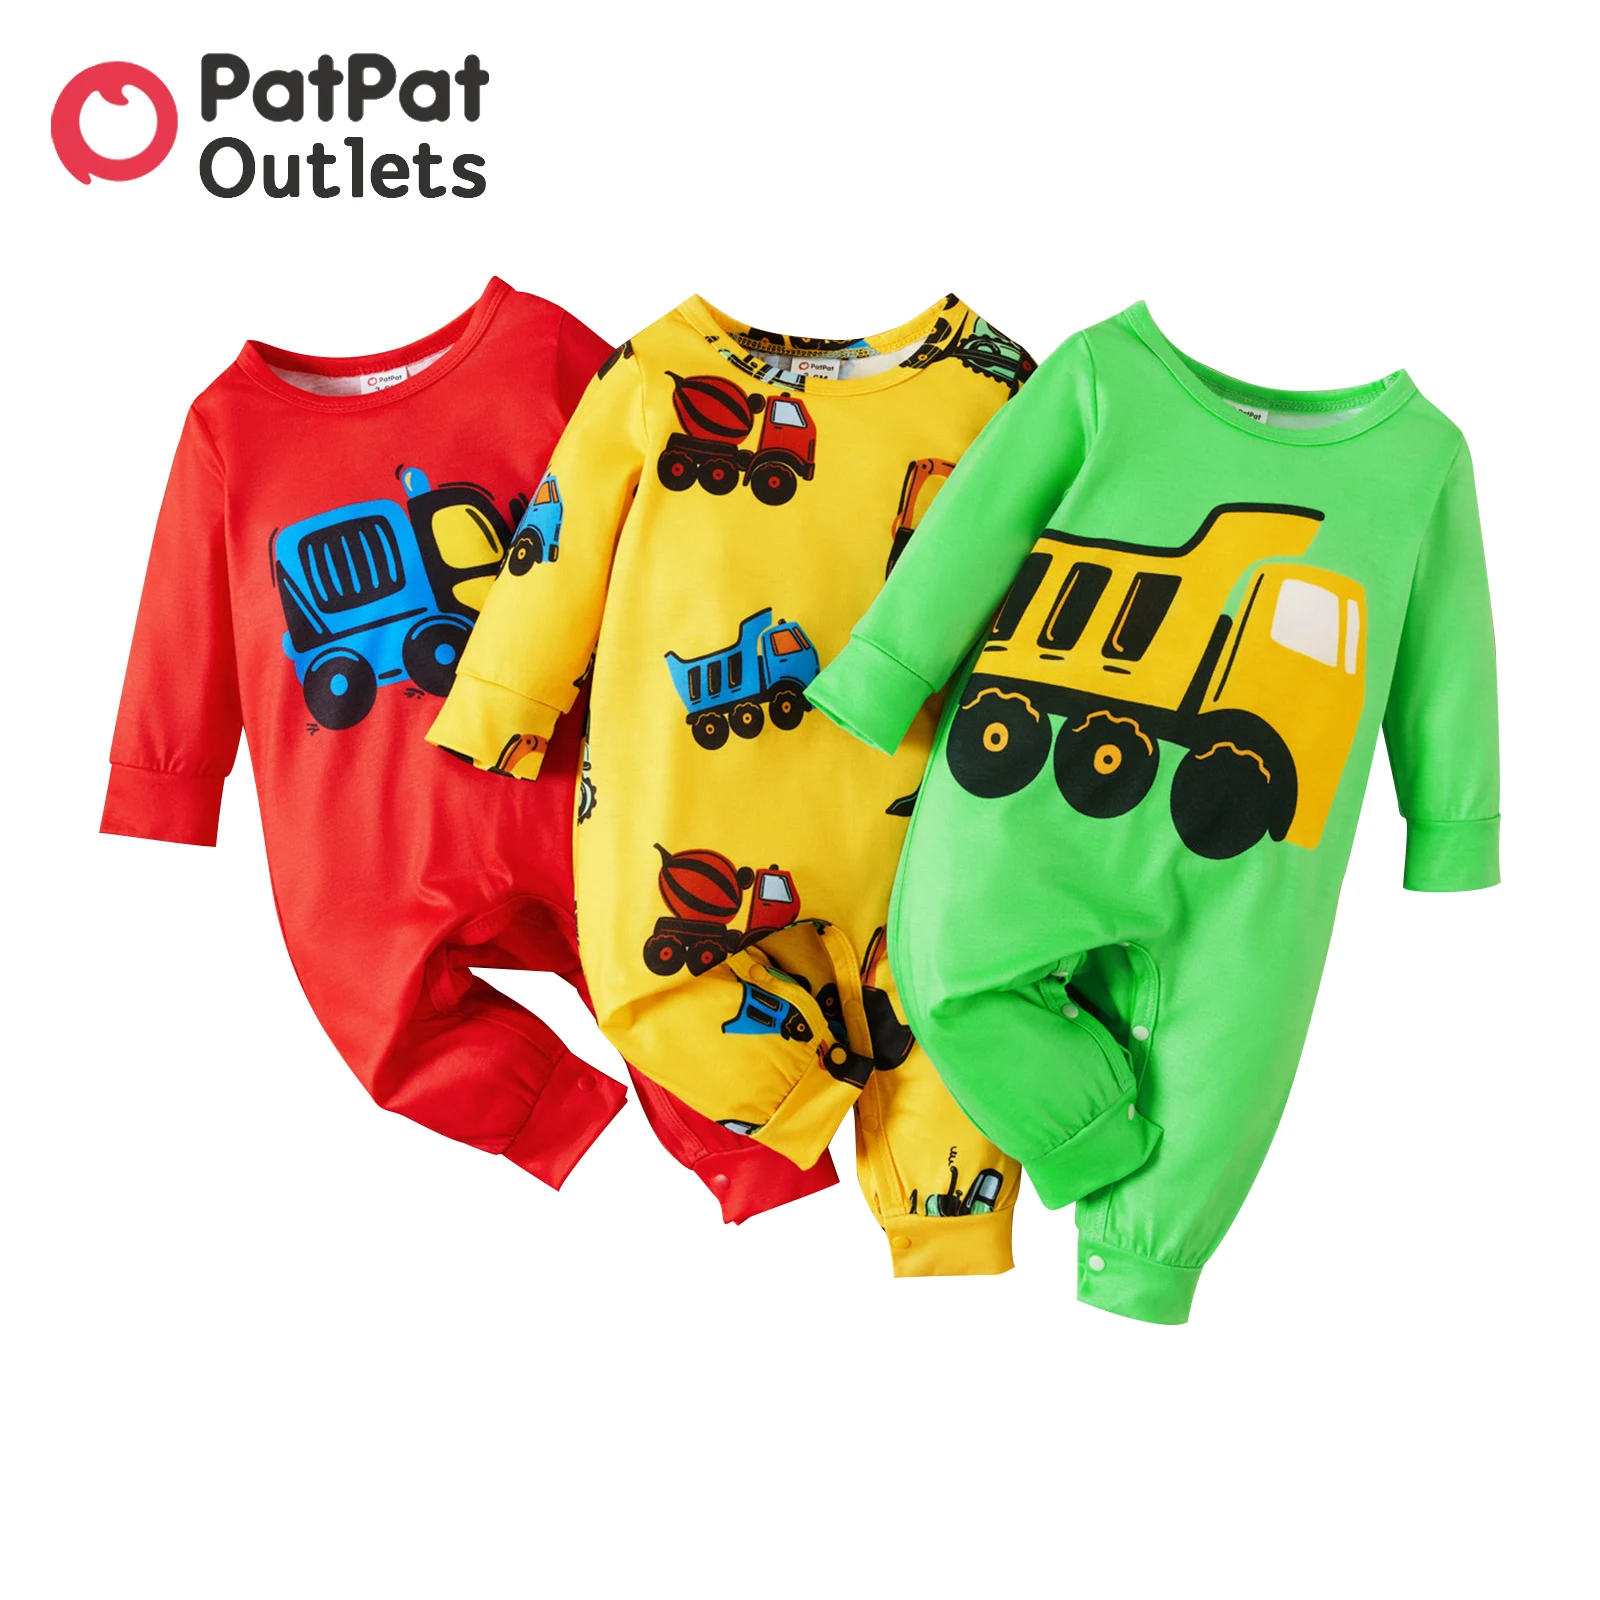 

PatPat Boy Baby Clothes New Born Overalls Jumpsuit Romper Infant Newborn Babies Costume Vehicle Truck Print Long-sleeve